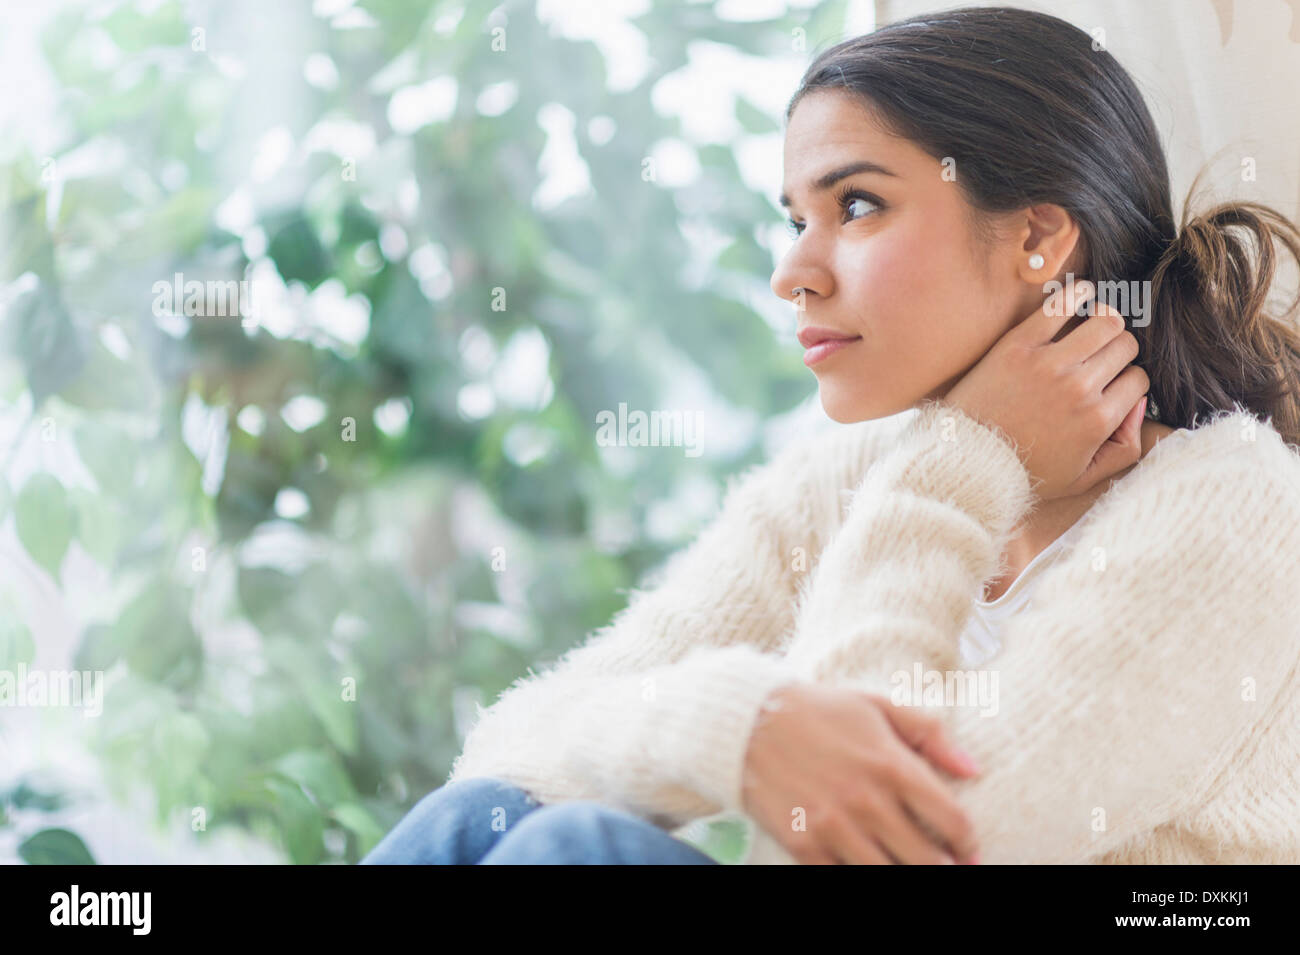 Pensive Hispanic woman looking out window Stock Photo